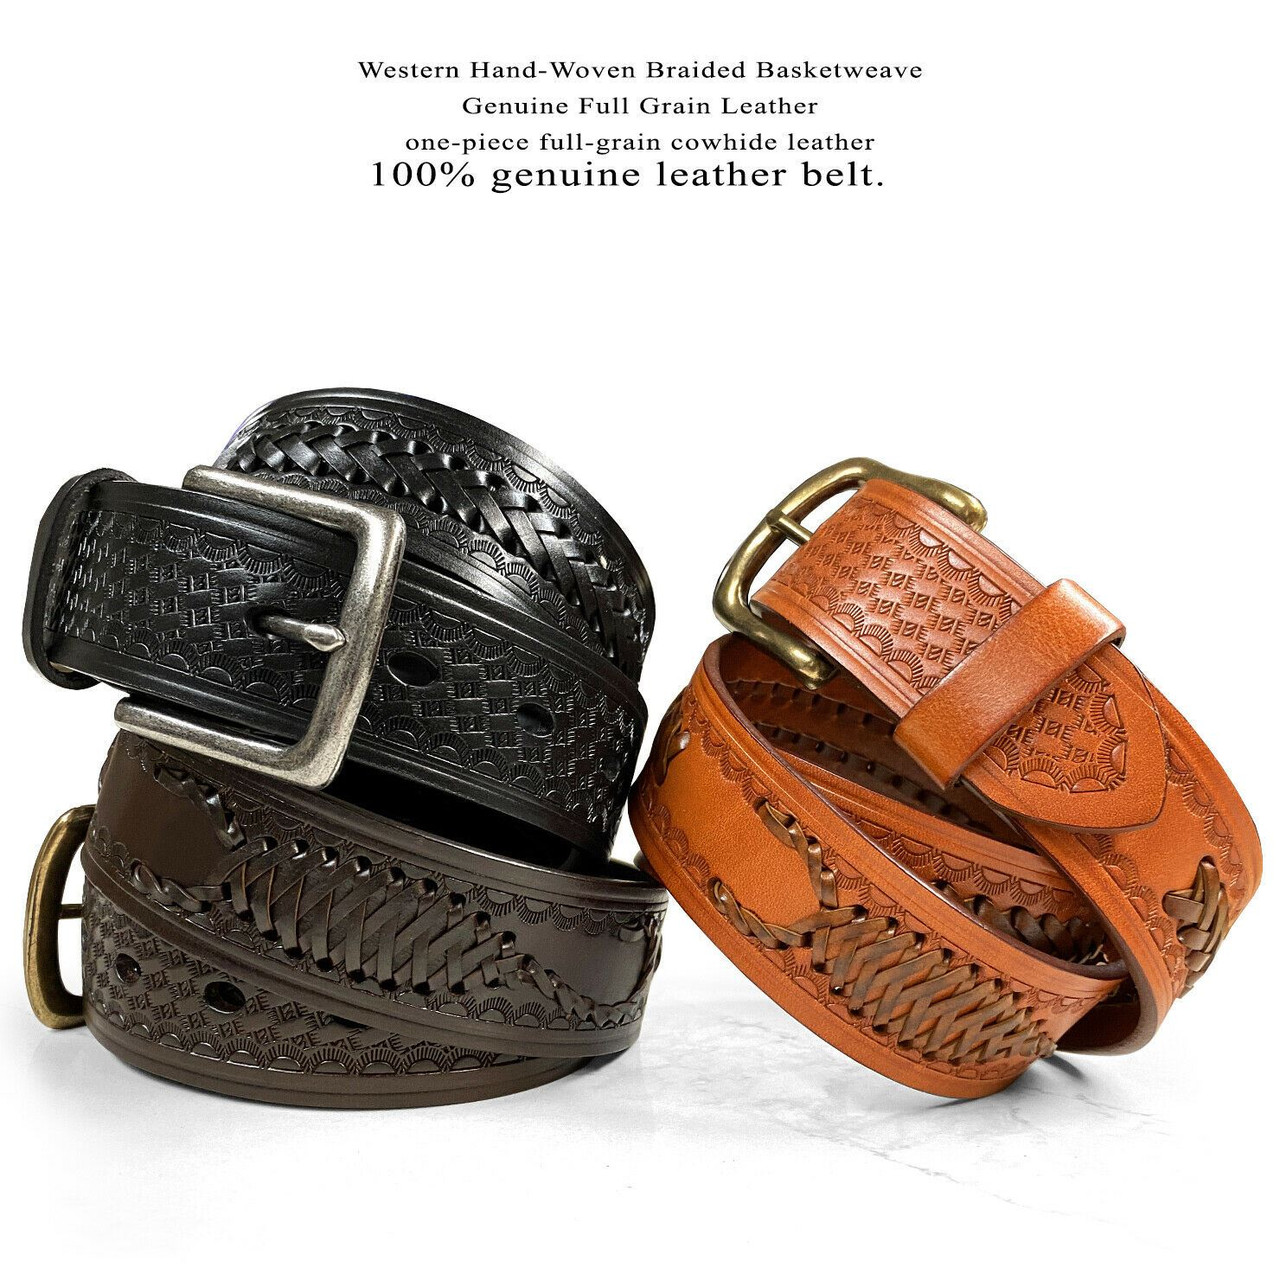 1.5 (38mm) Cognac Western Style Leather Belt Handmade in Canada by Ze